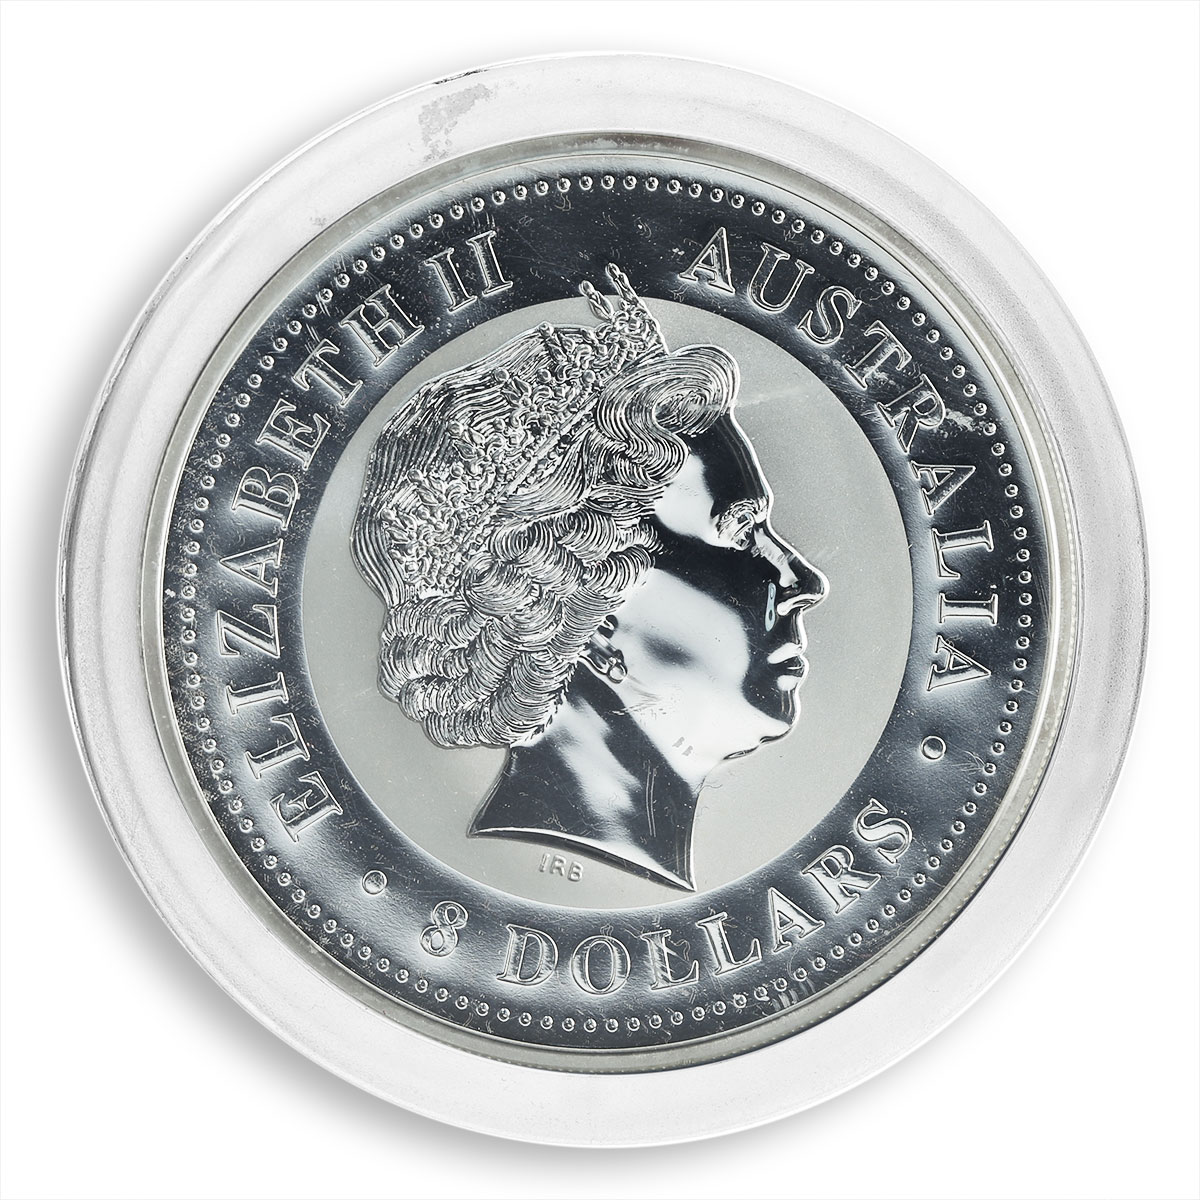 Australia 8 Dollars Year of the Pig Lunar Series I 5 Oz Silver Coin 2007